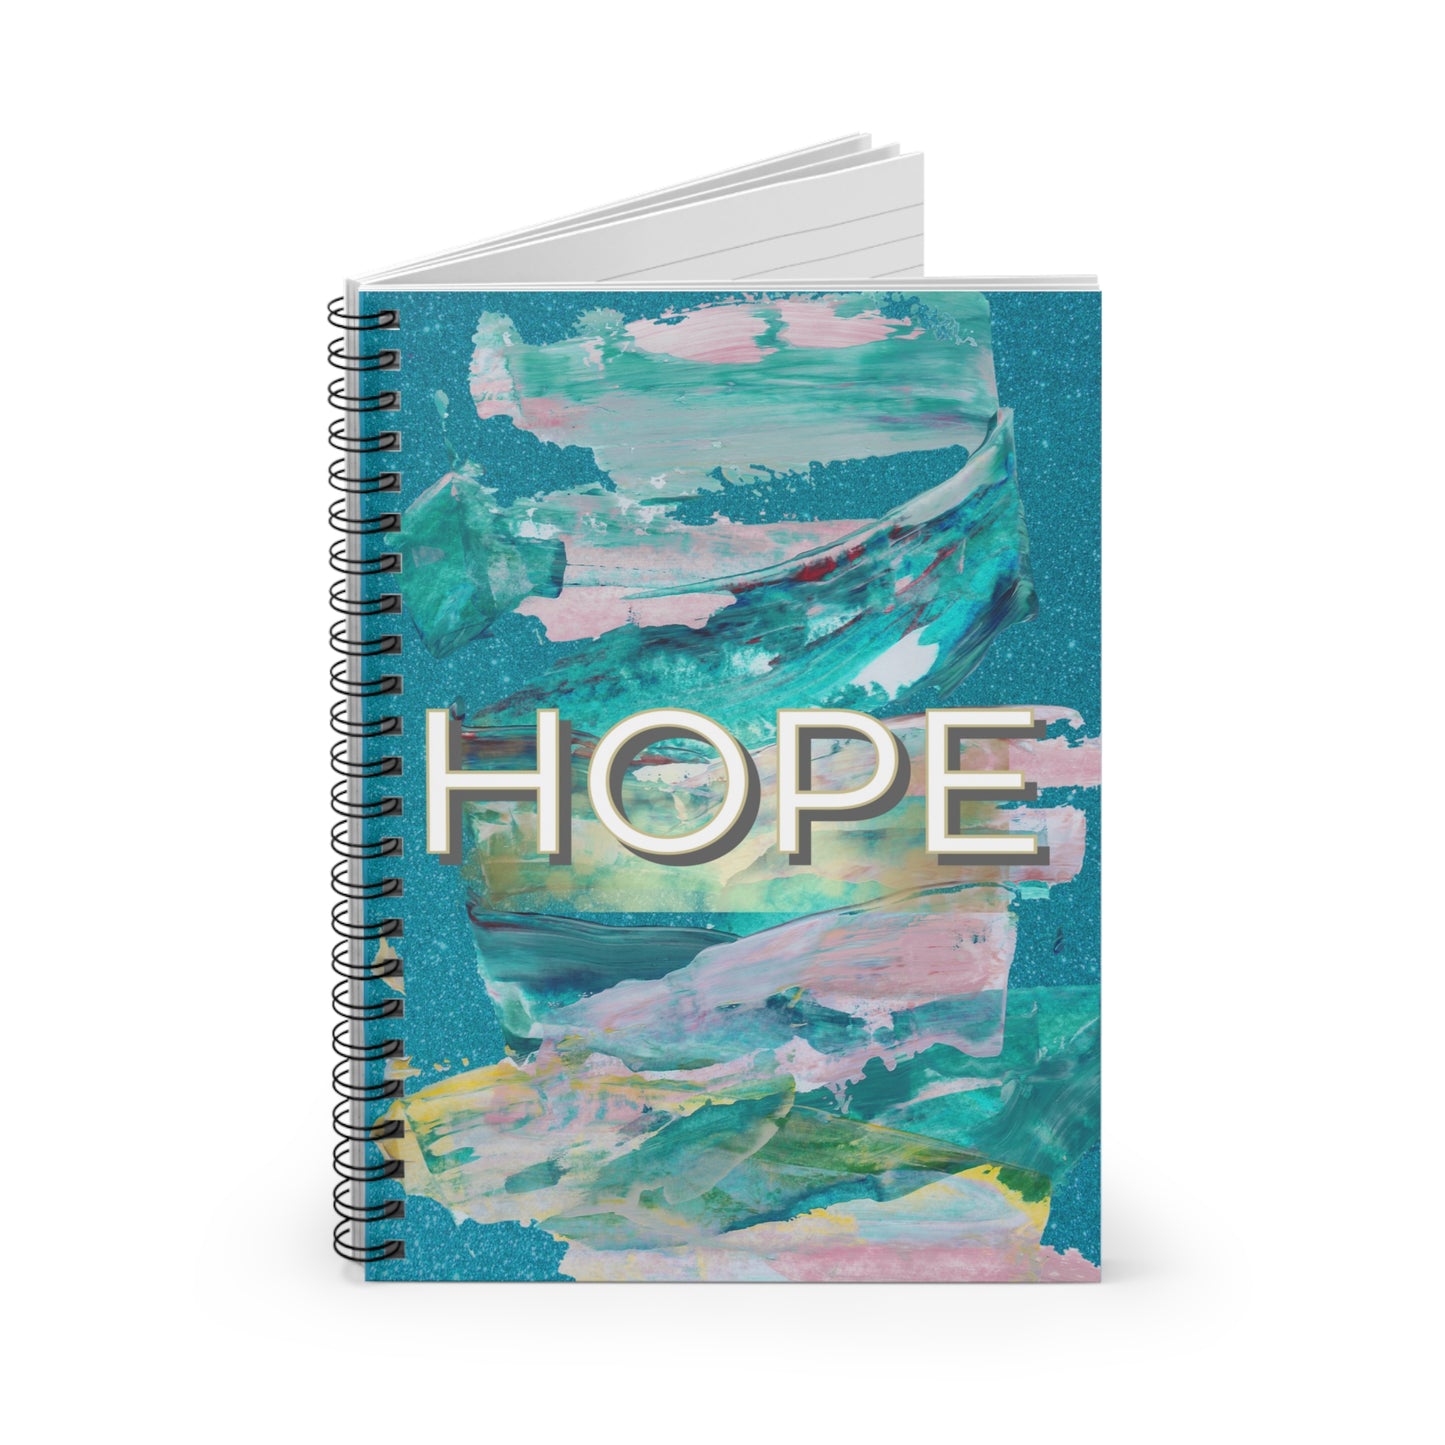 Spiral Notebook - Ruled Line - HOPE